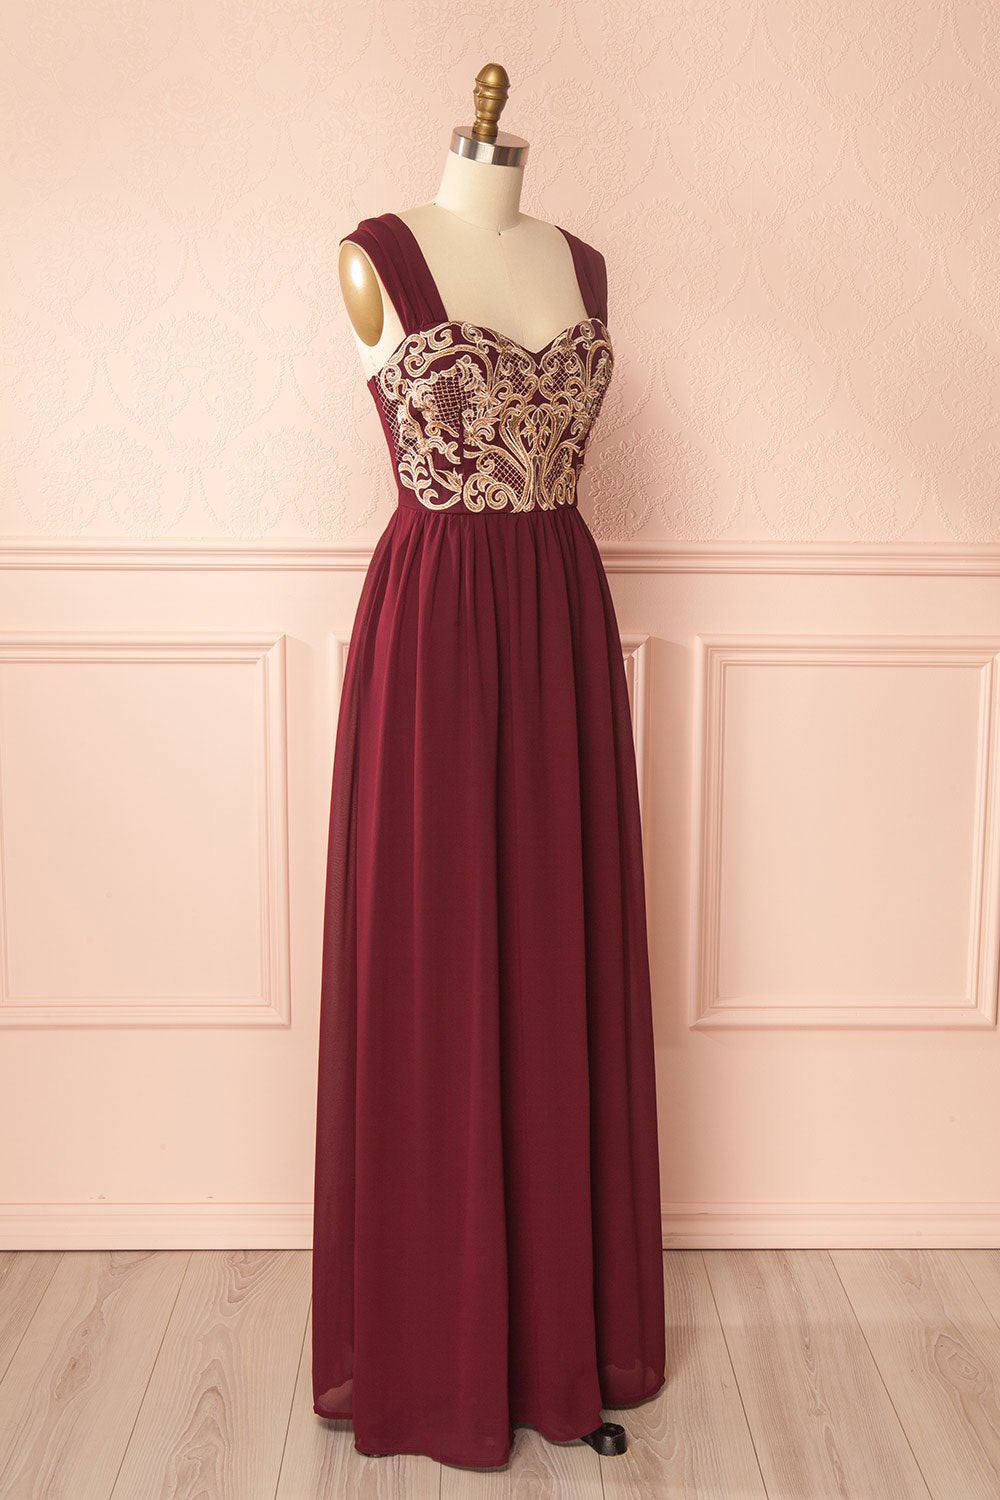 Burgundy chiffon lace applique long prom dress, burgundy evening dress